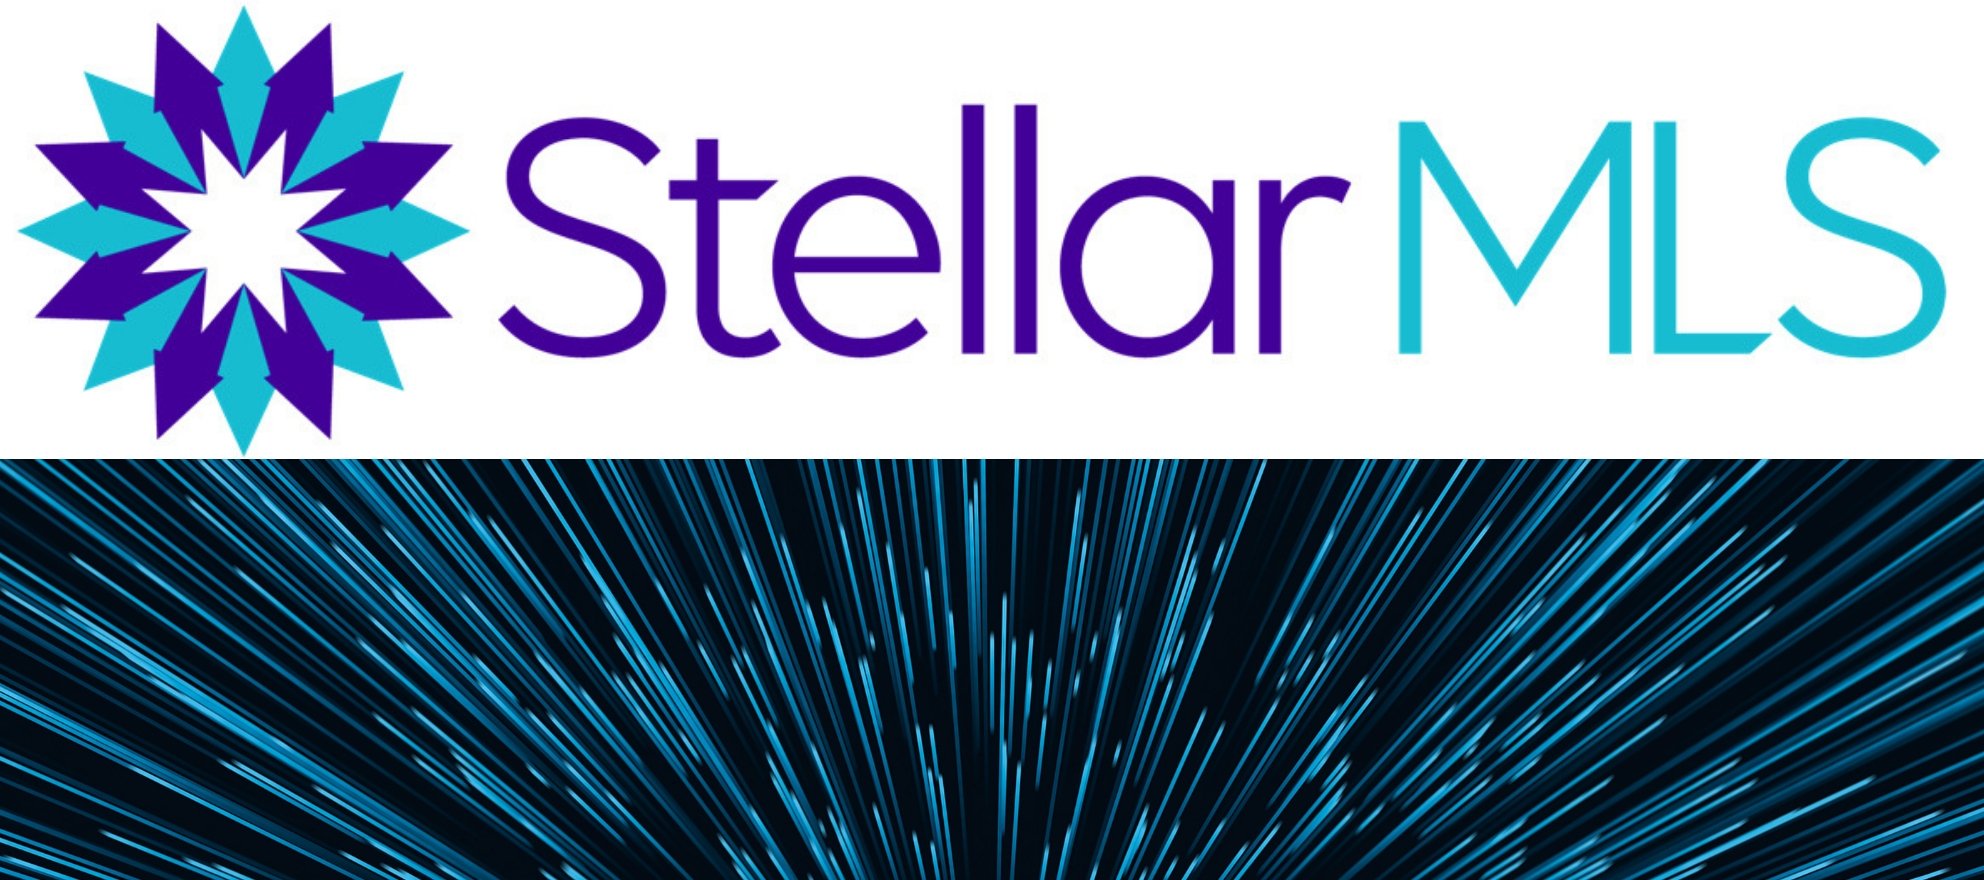 Stellar MLS Shareholders and Customers - Stellar MLS